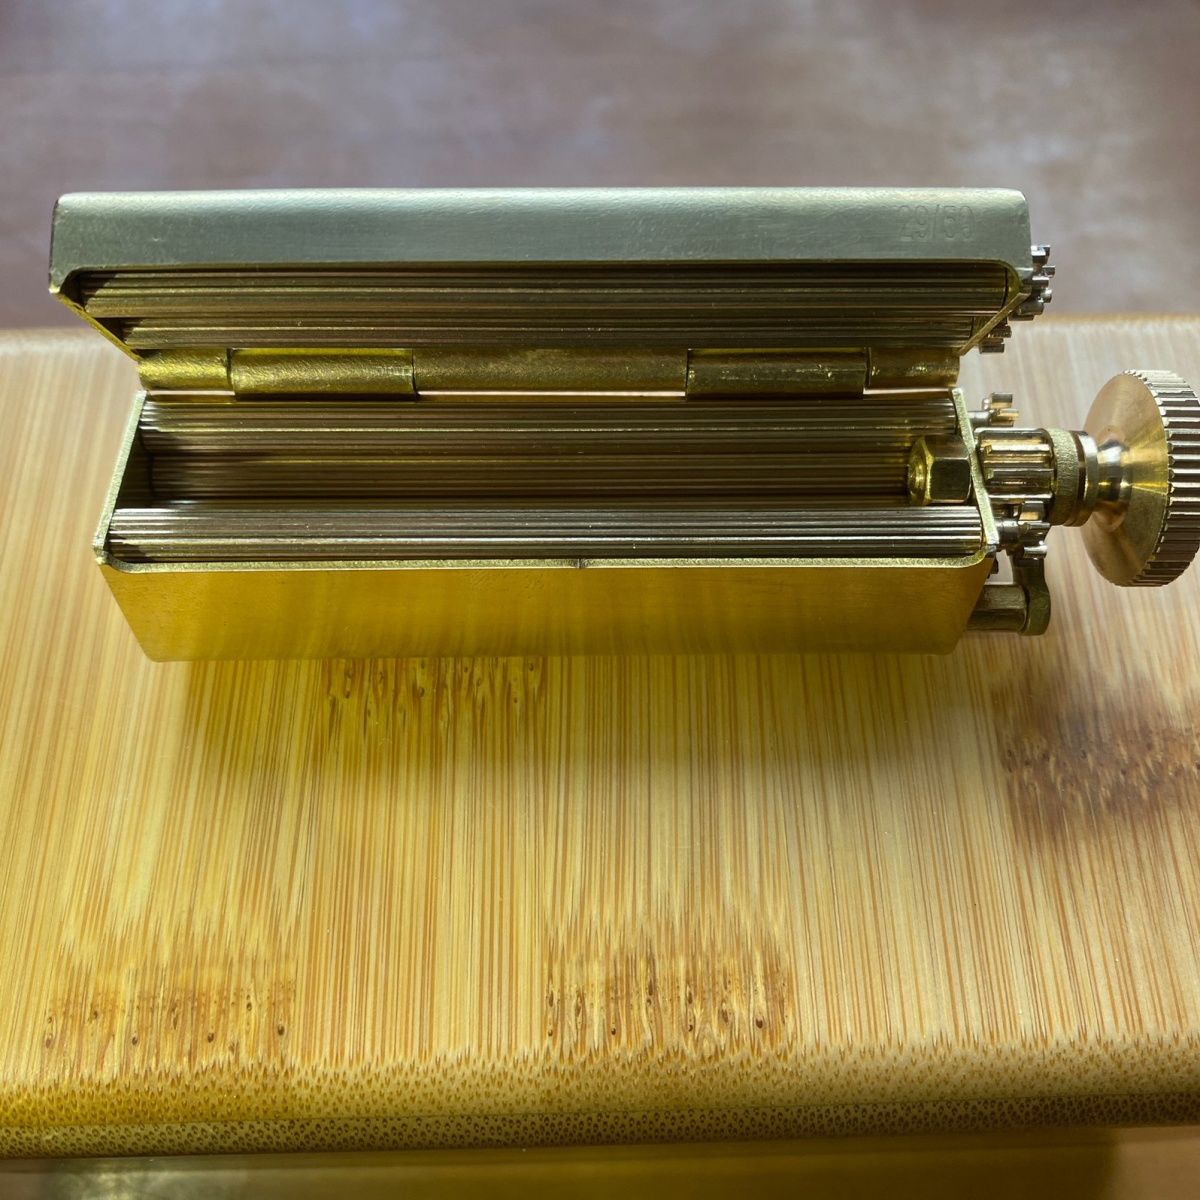 The Walter Handmade Brass Cigarette Rolling Machine